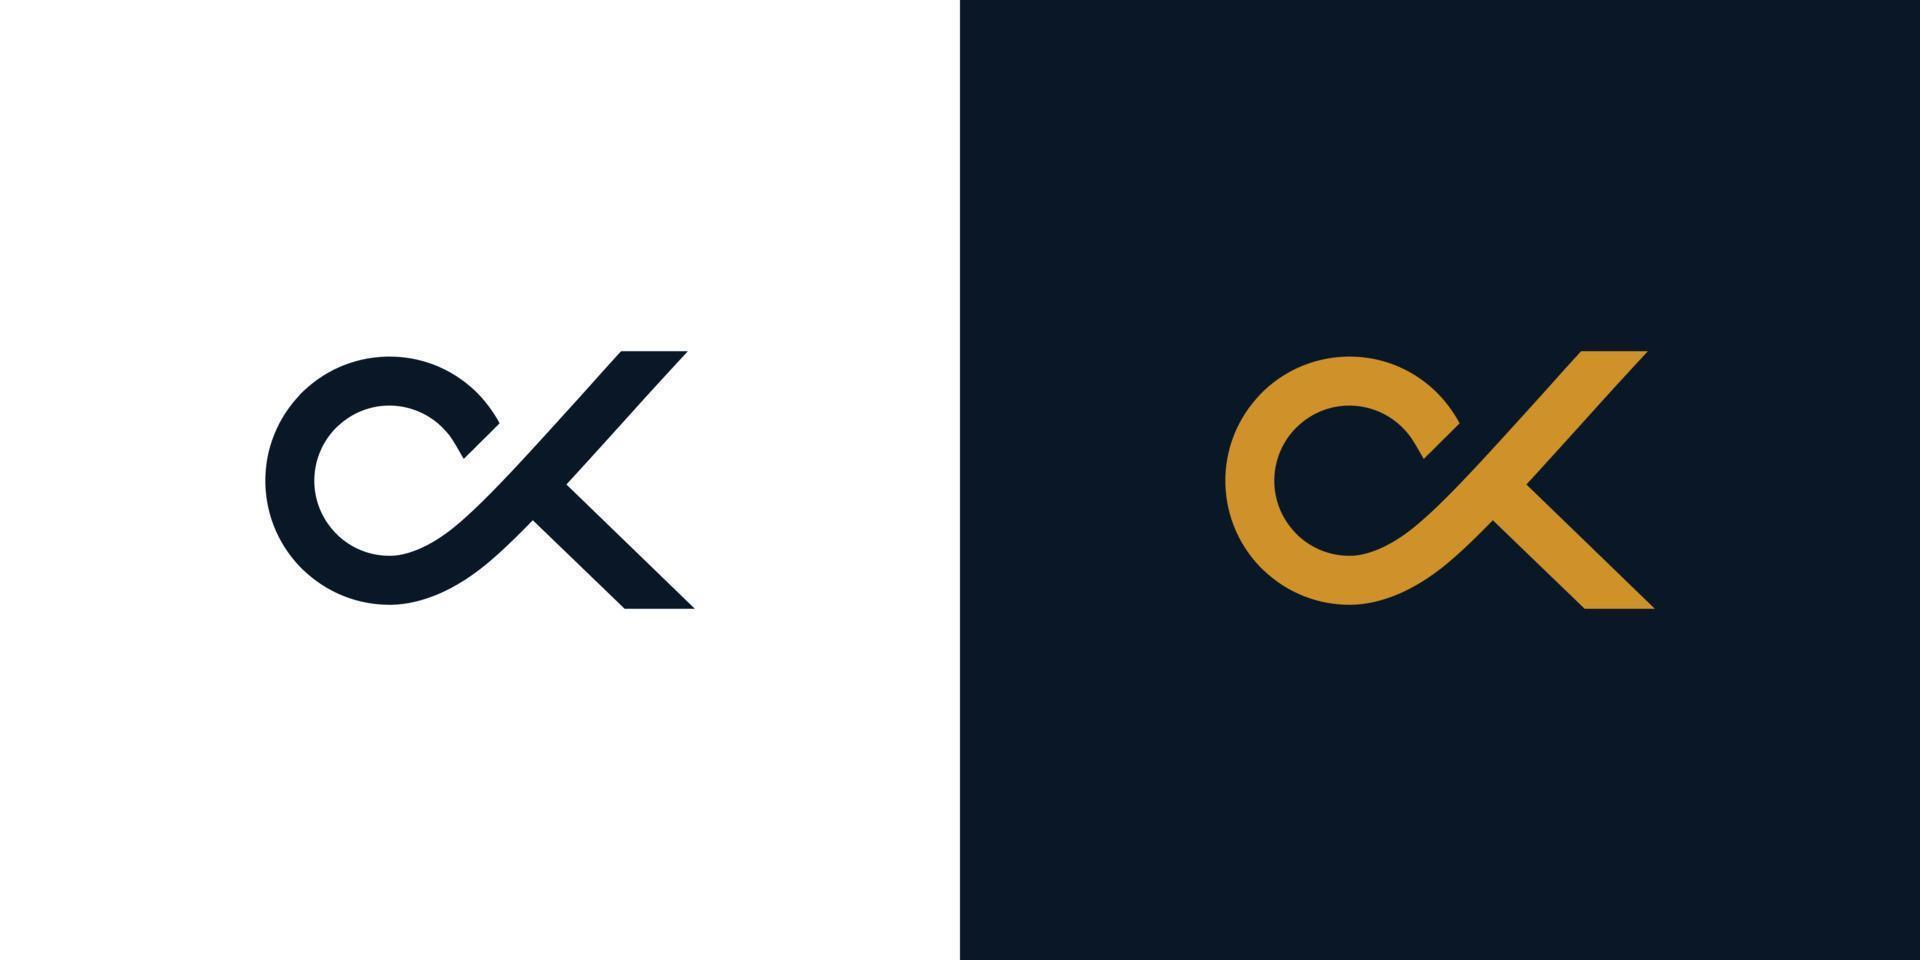 Modern and simple CK logo design vector